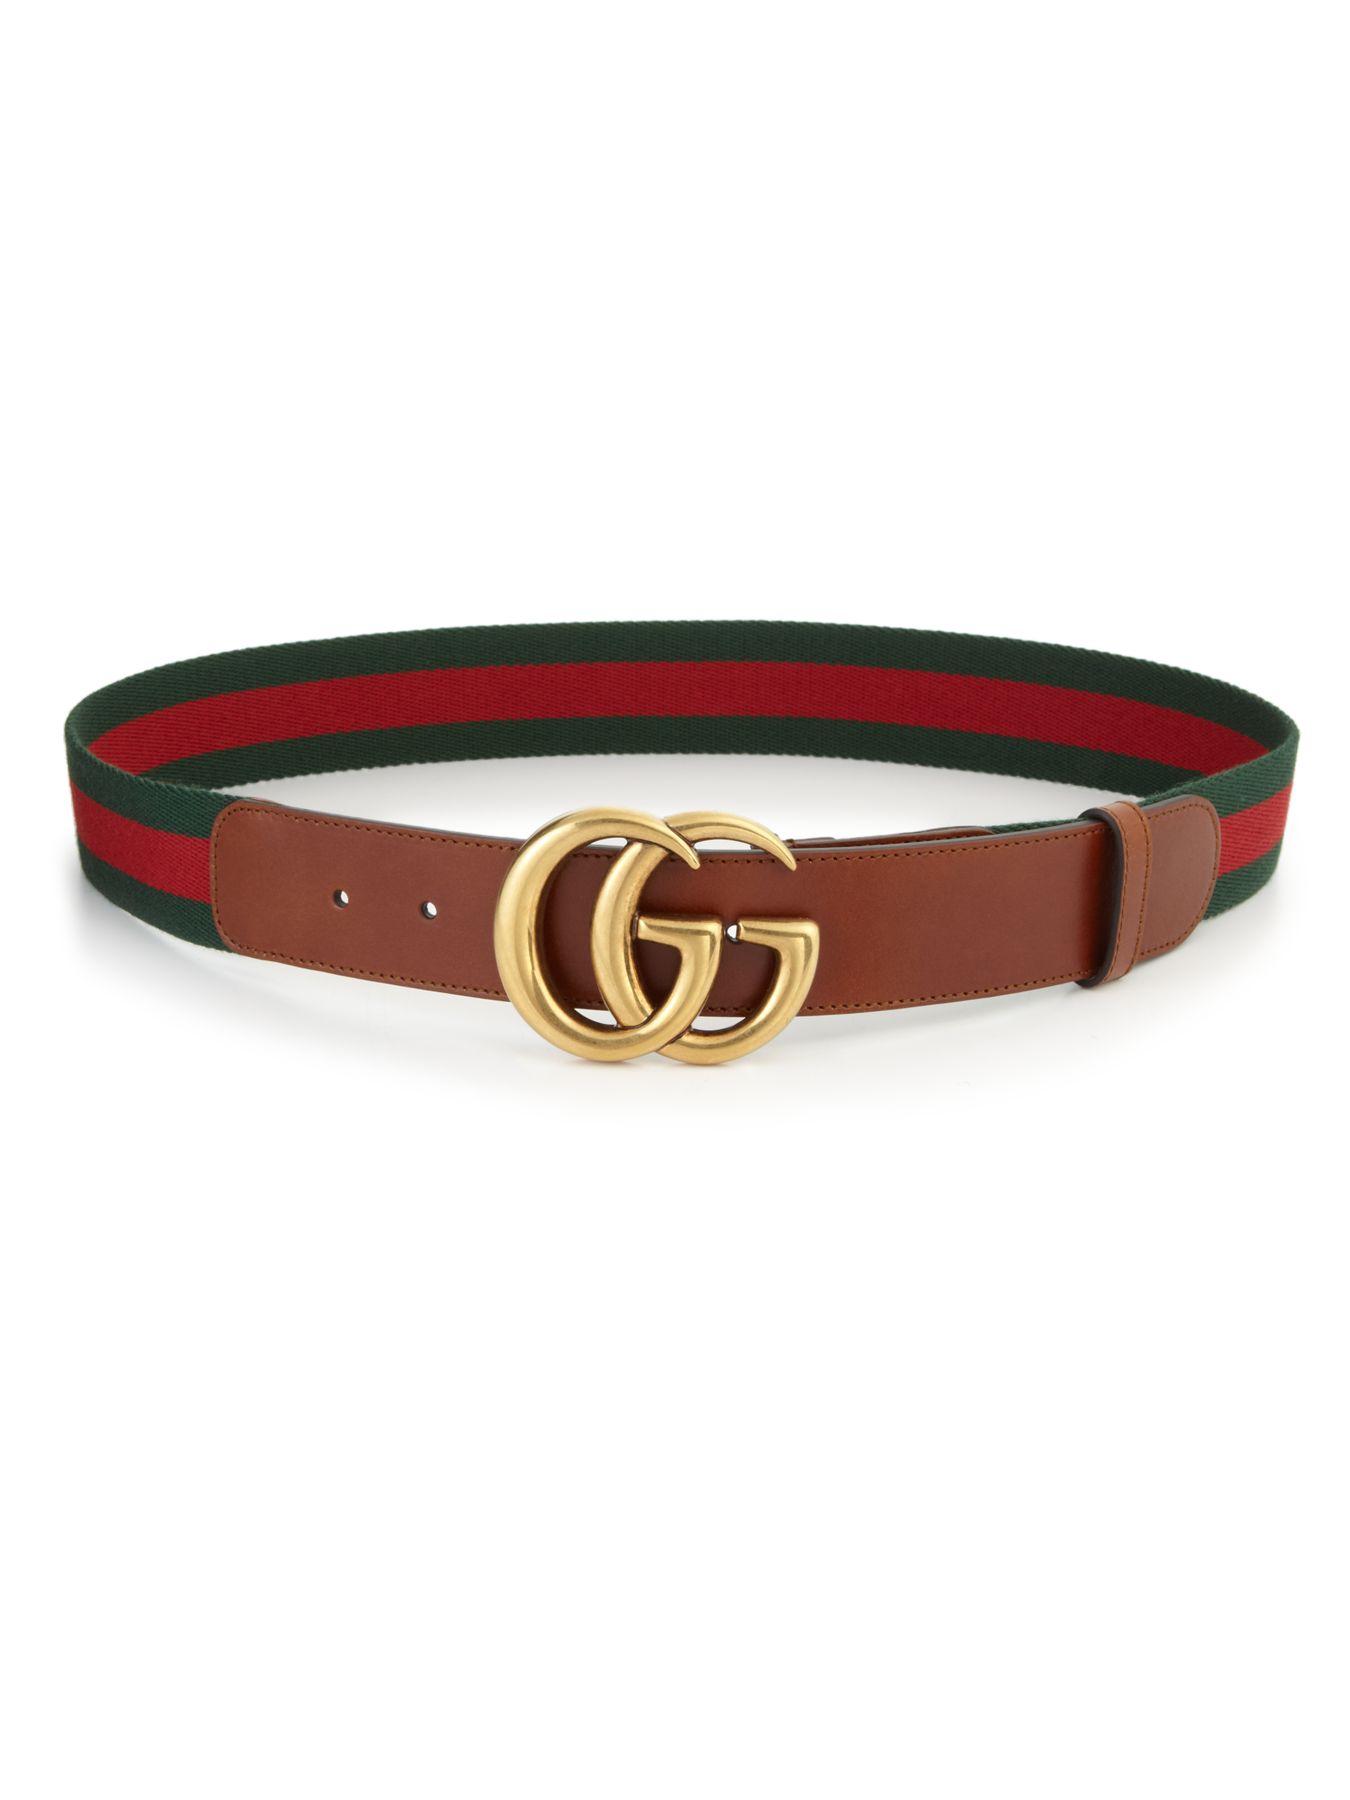 Gucci GG Webbing Belt in Brown - Lyst